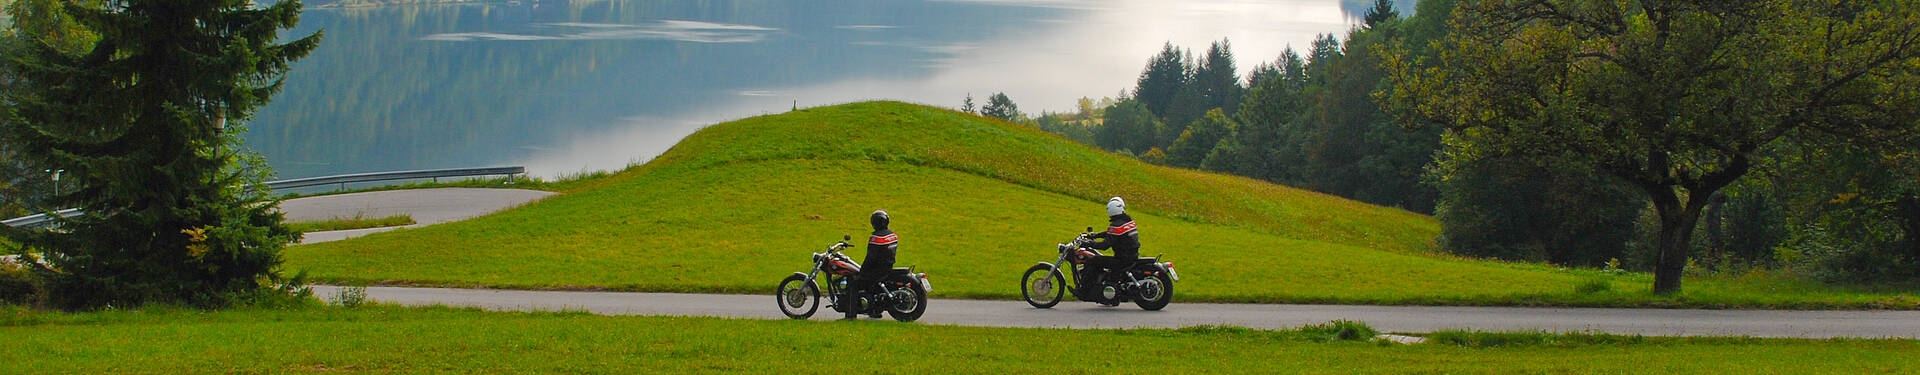 Motorradland Kärnten, Weissensee